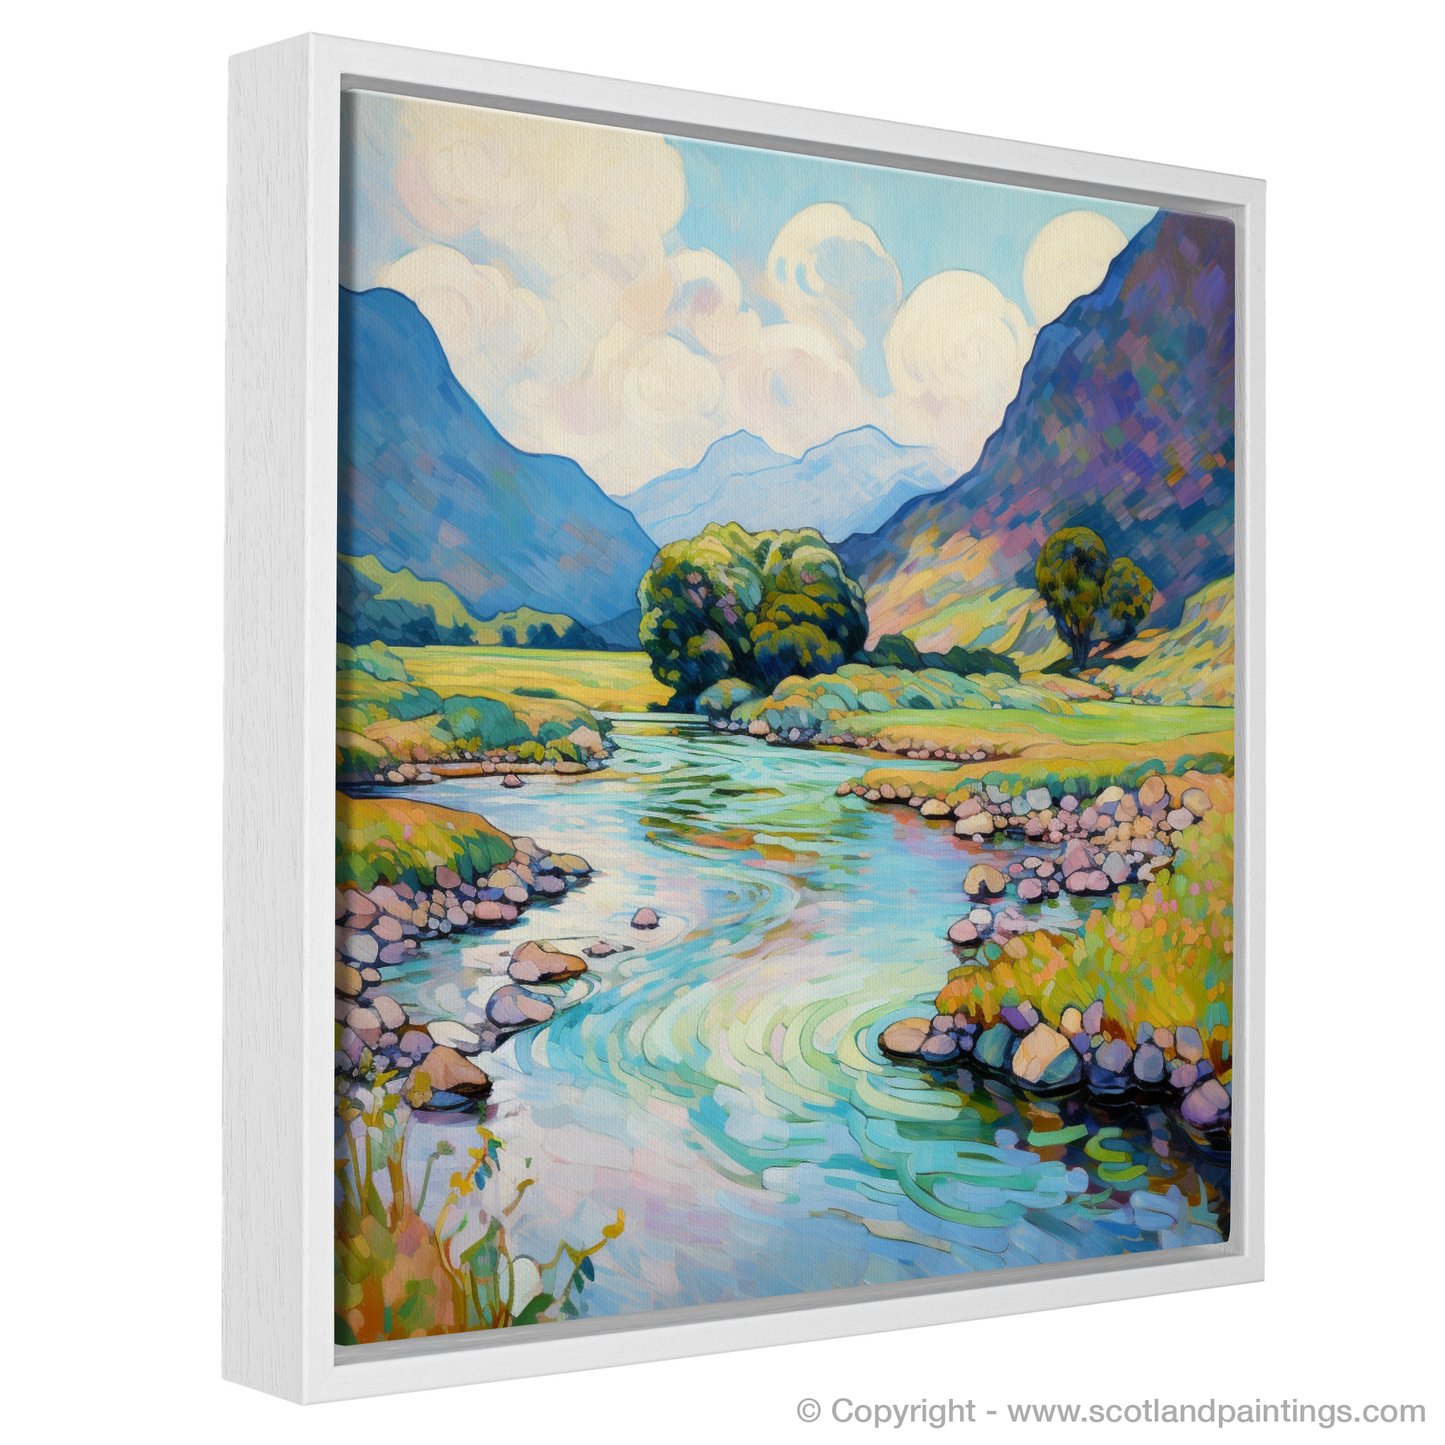 Painting and Art Print of River Coe, Glencoe, Highlands in summer entitled "Summer Serenade on River Coe Glencoe".